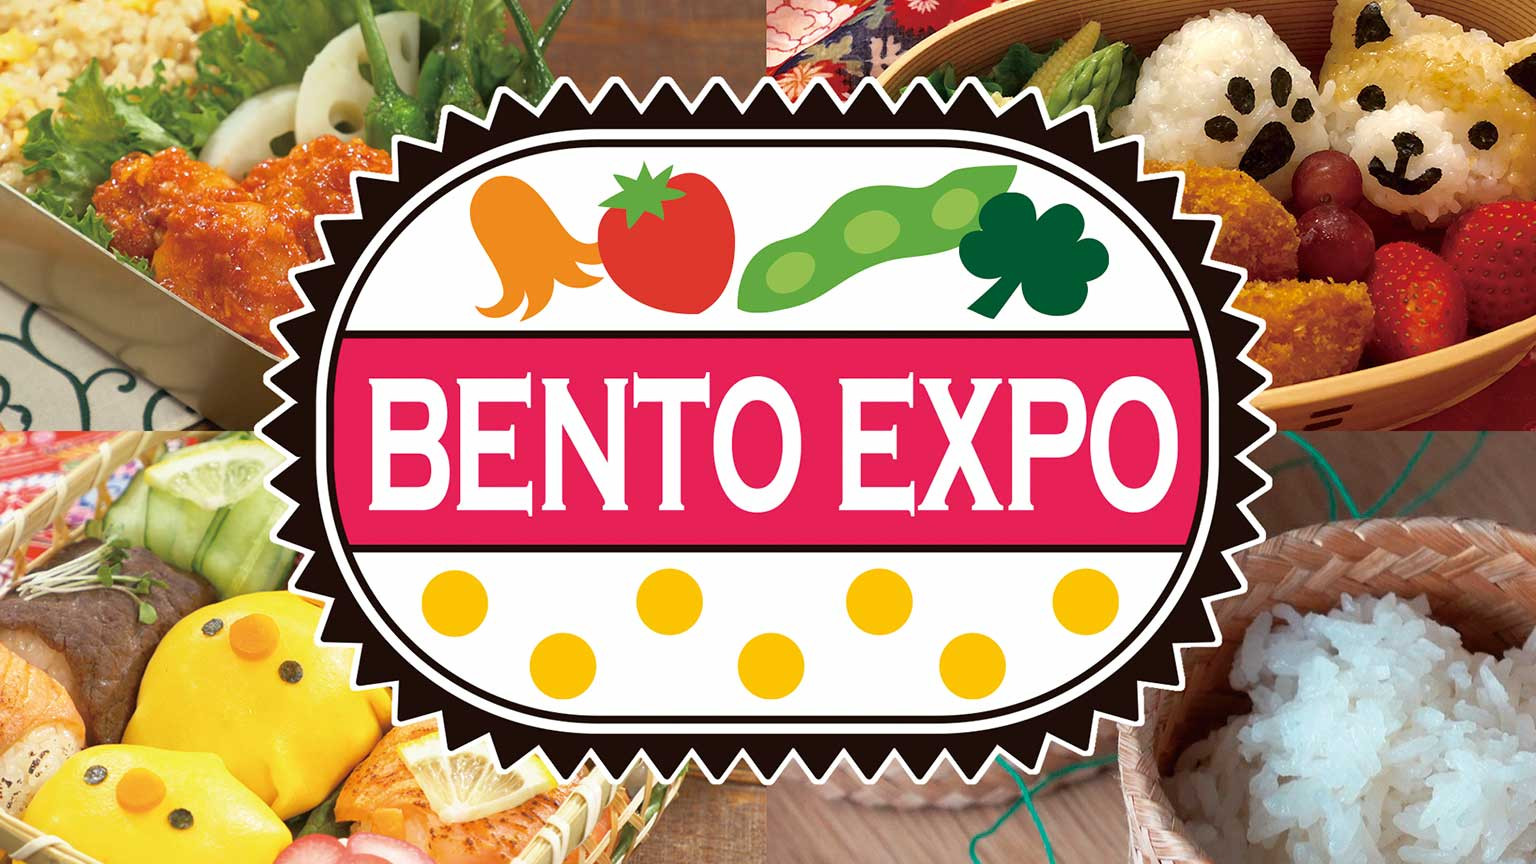 便當世博
BENTO EXPO